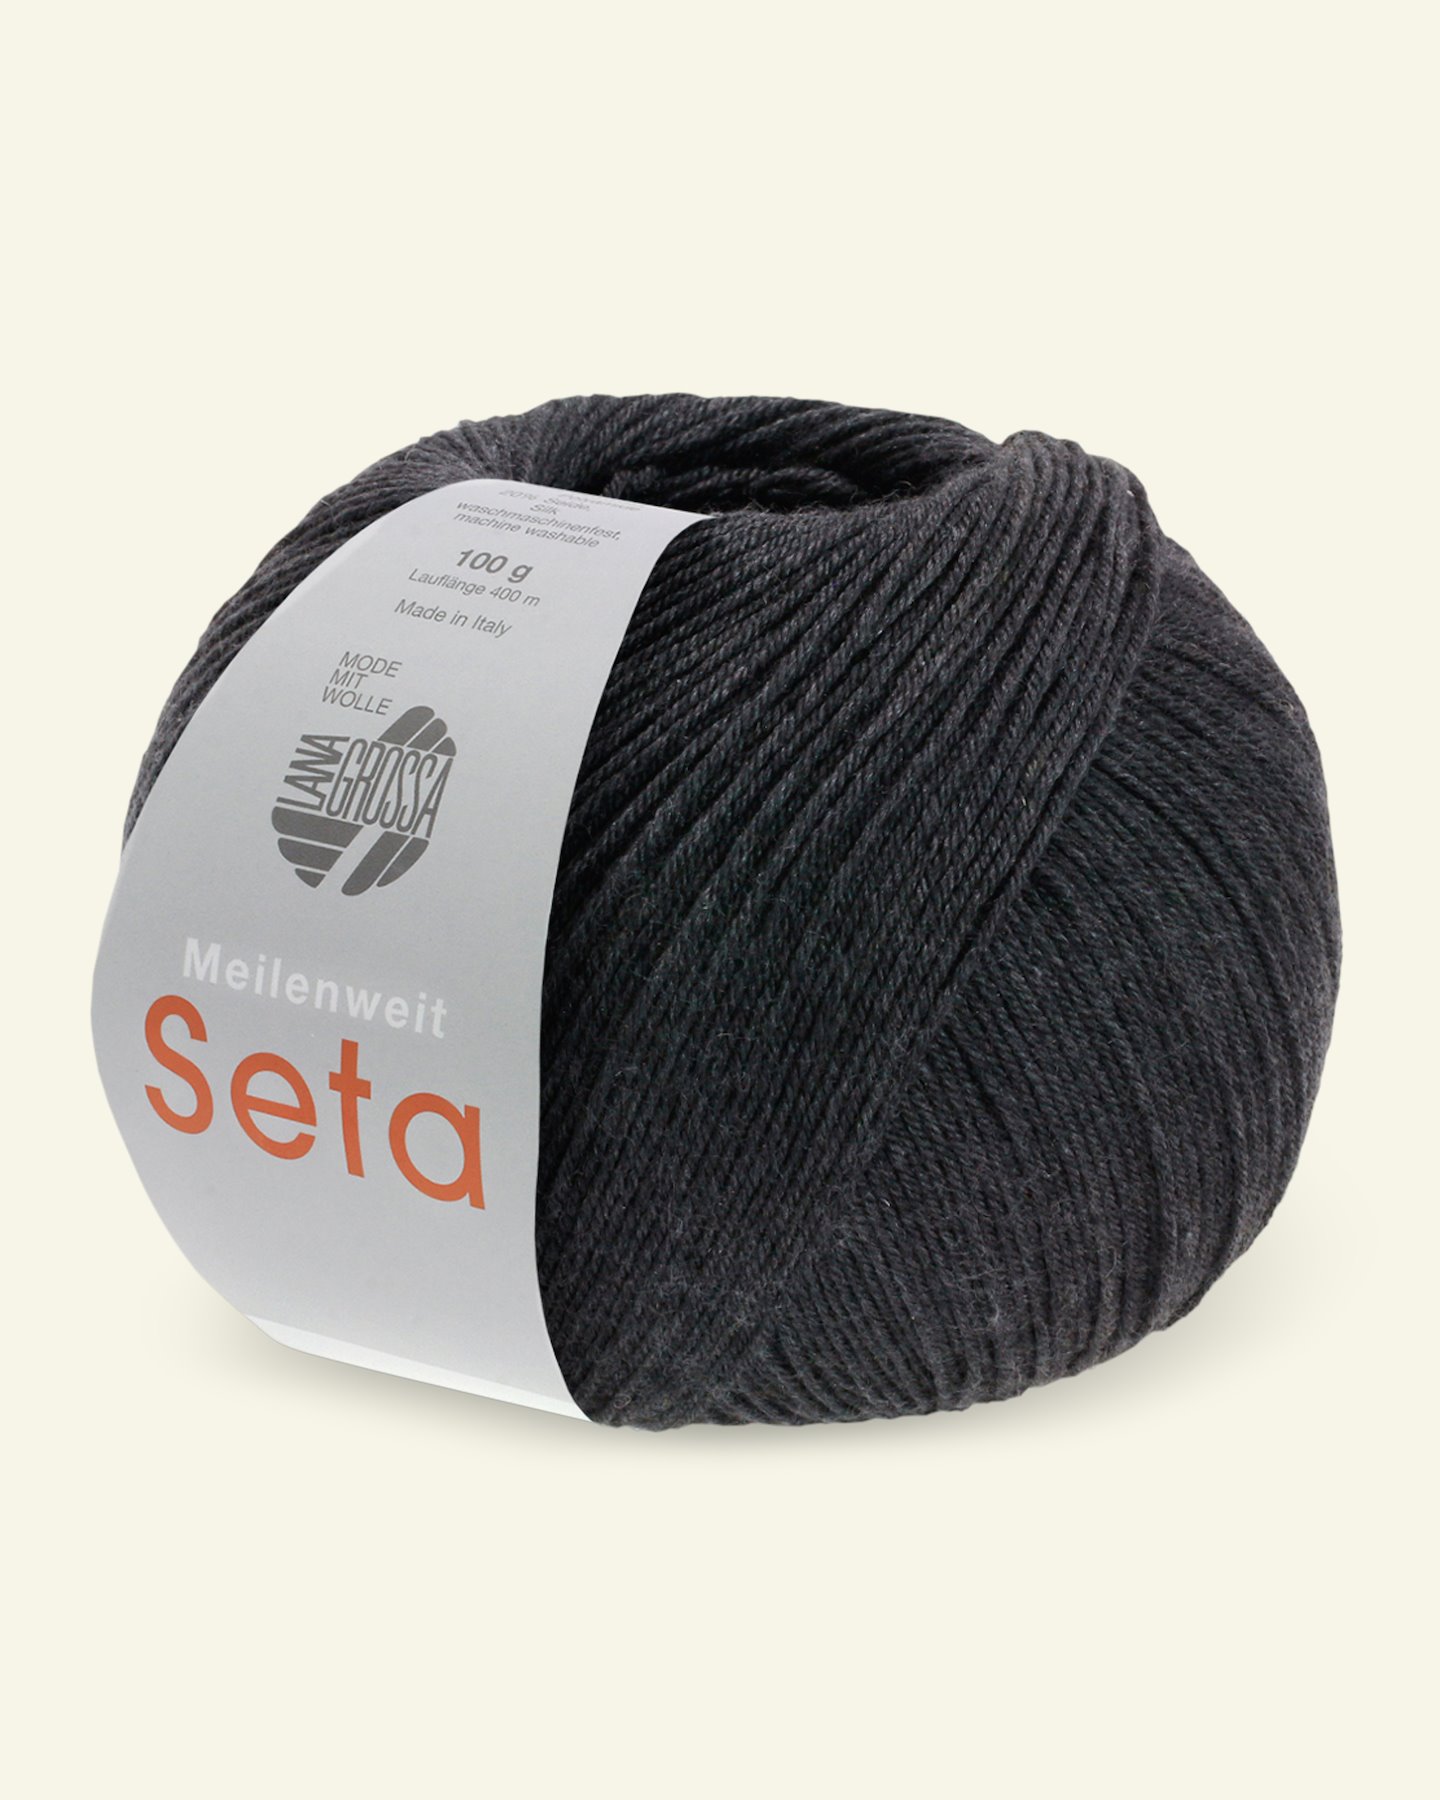 Buy Wool yarn for knitting and crochet